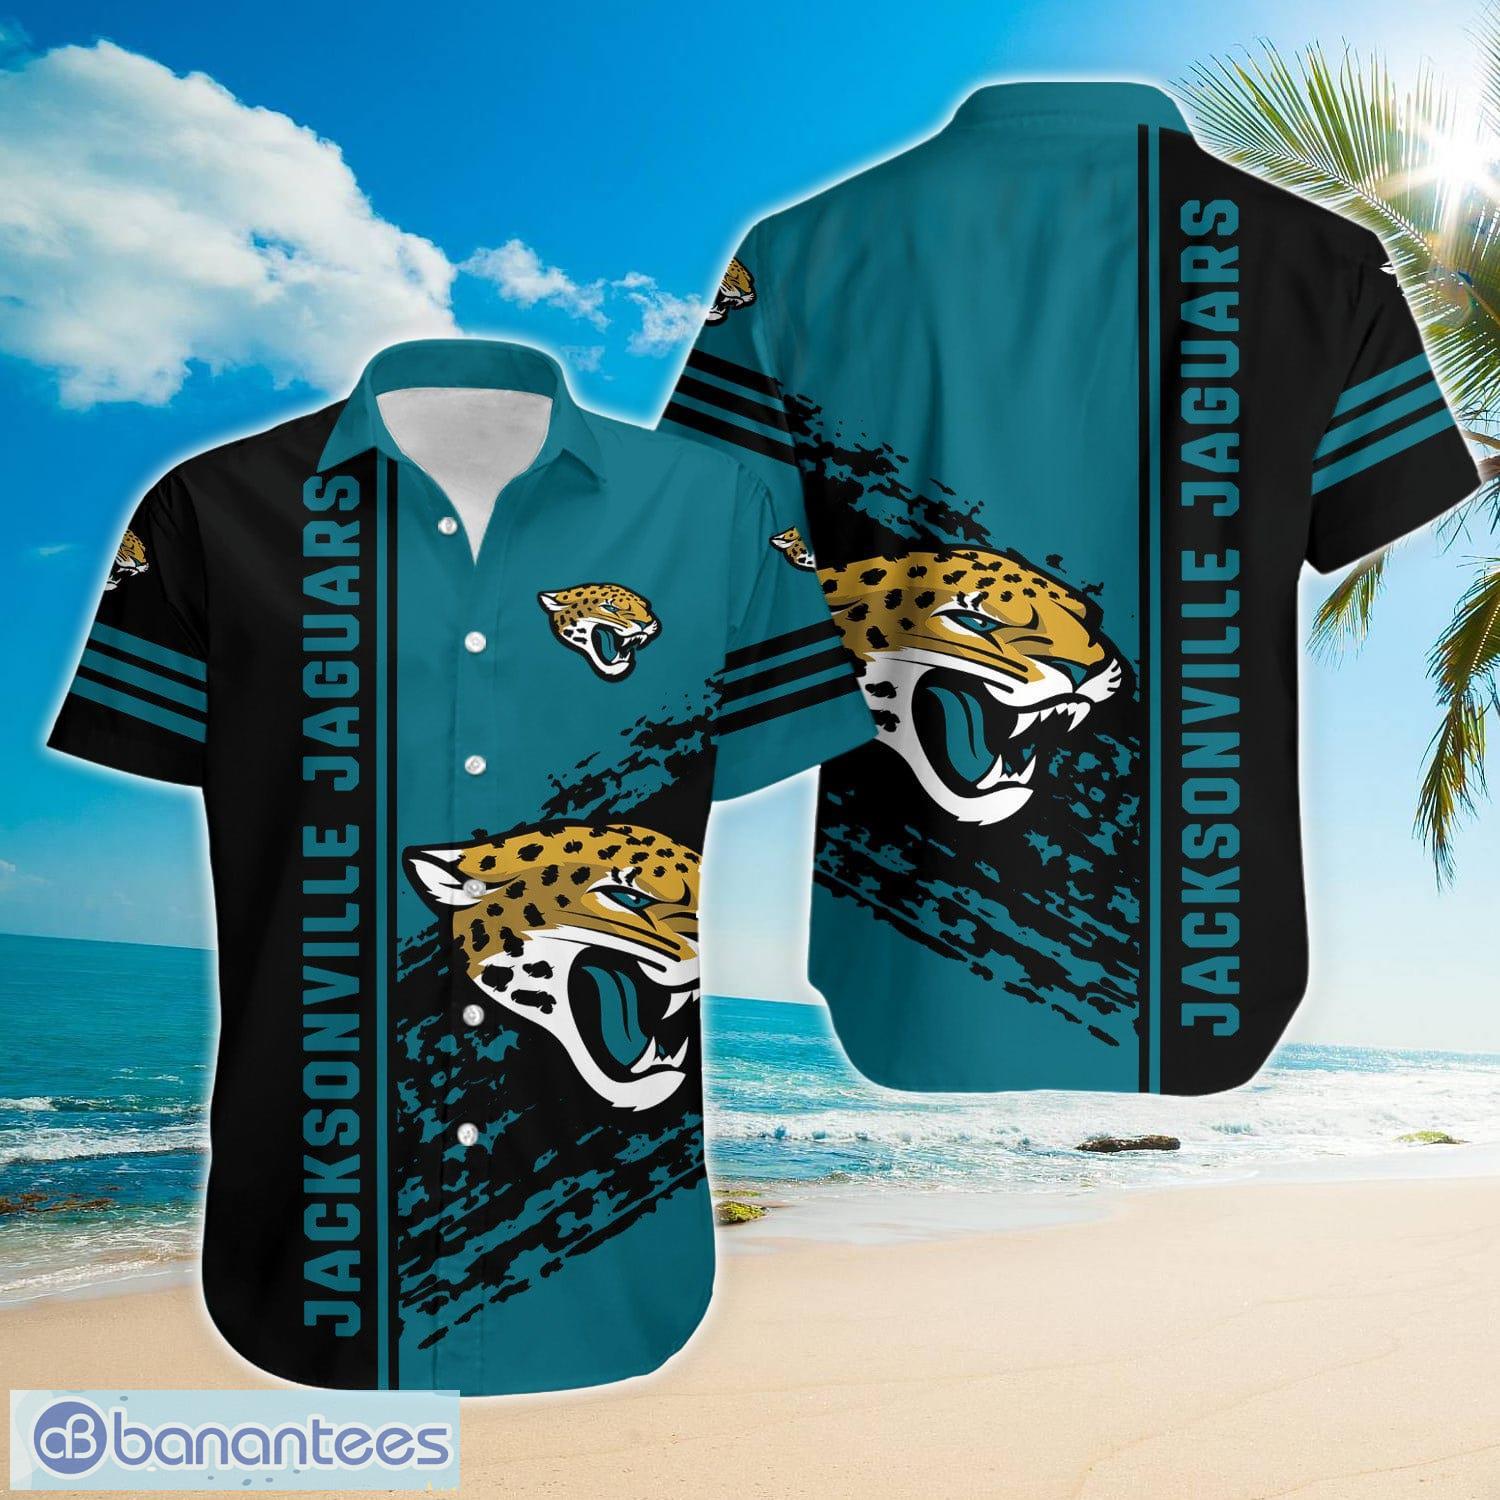 Kansas City Royals MLB Quarter Style Hawaiian Shirt For Fans